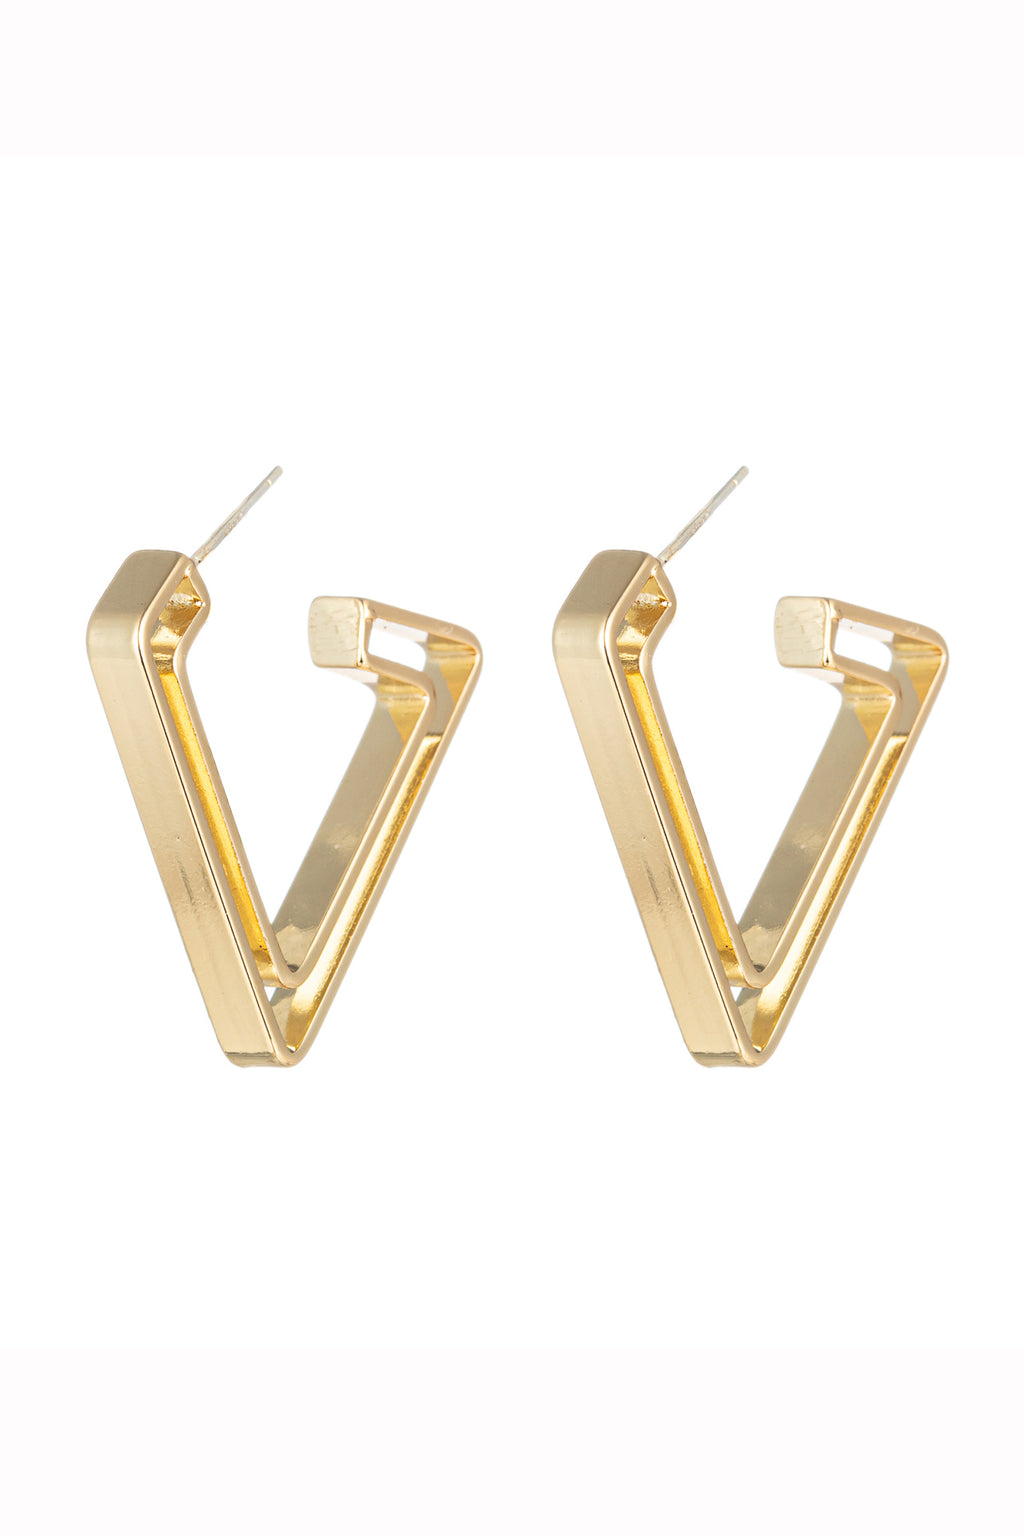 Geometric 24k gold plated earrings.